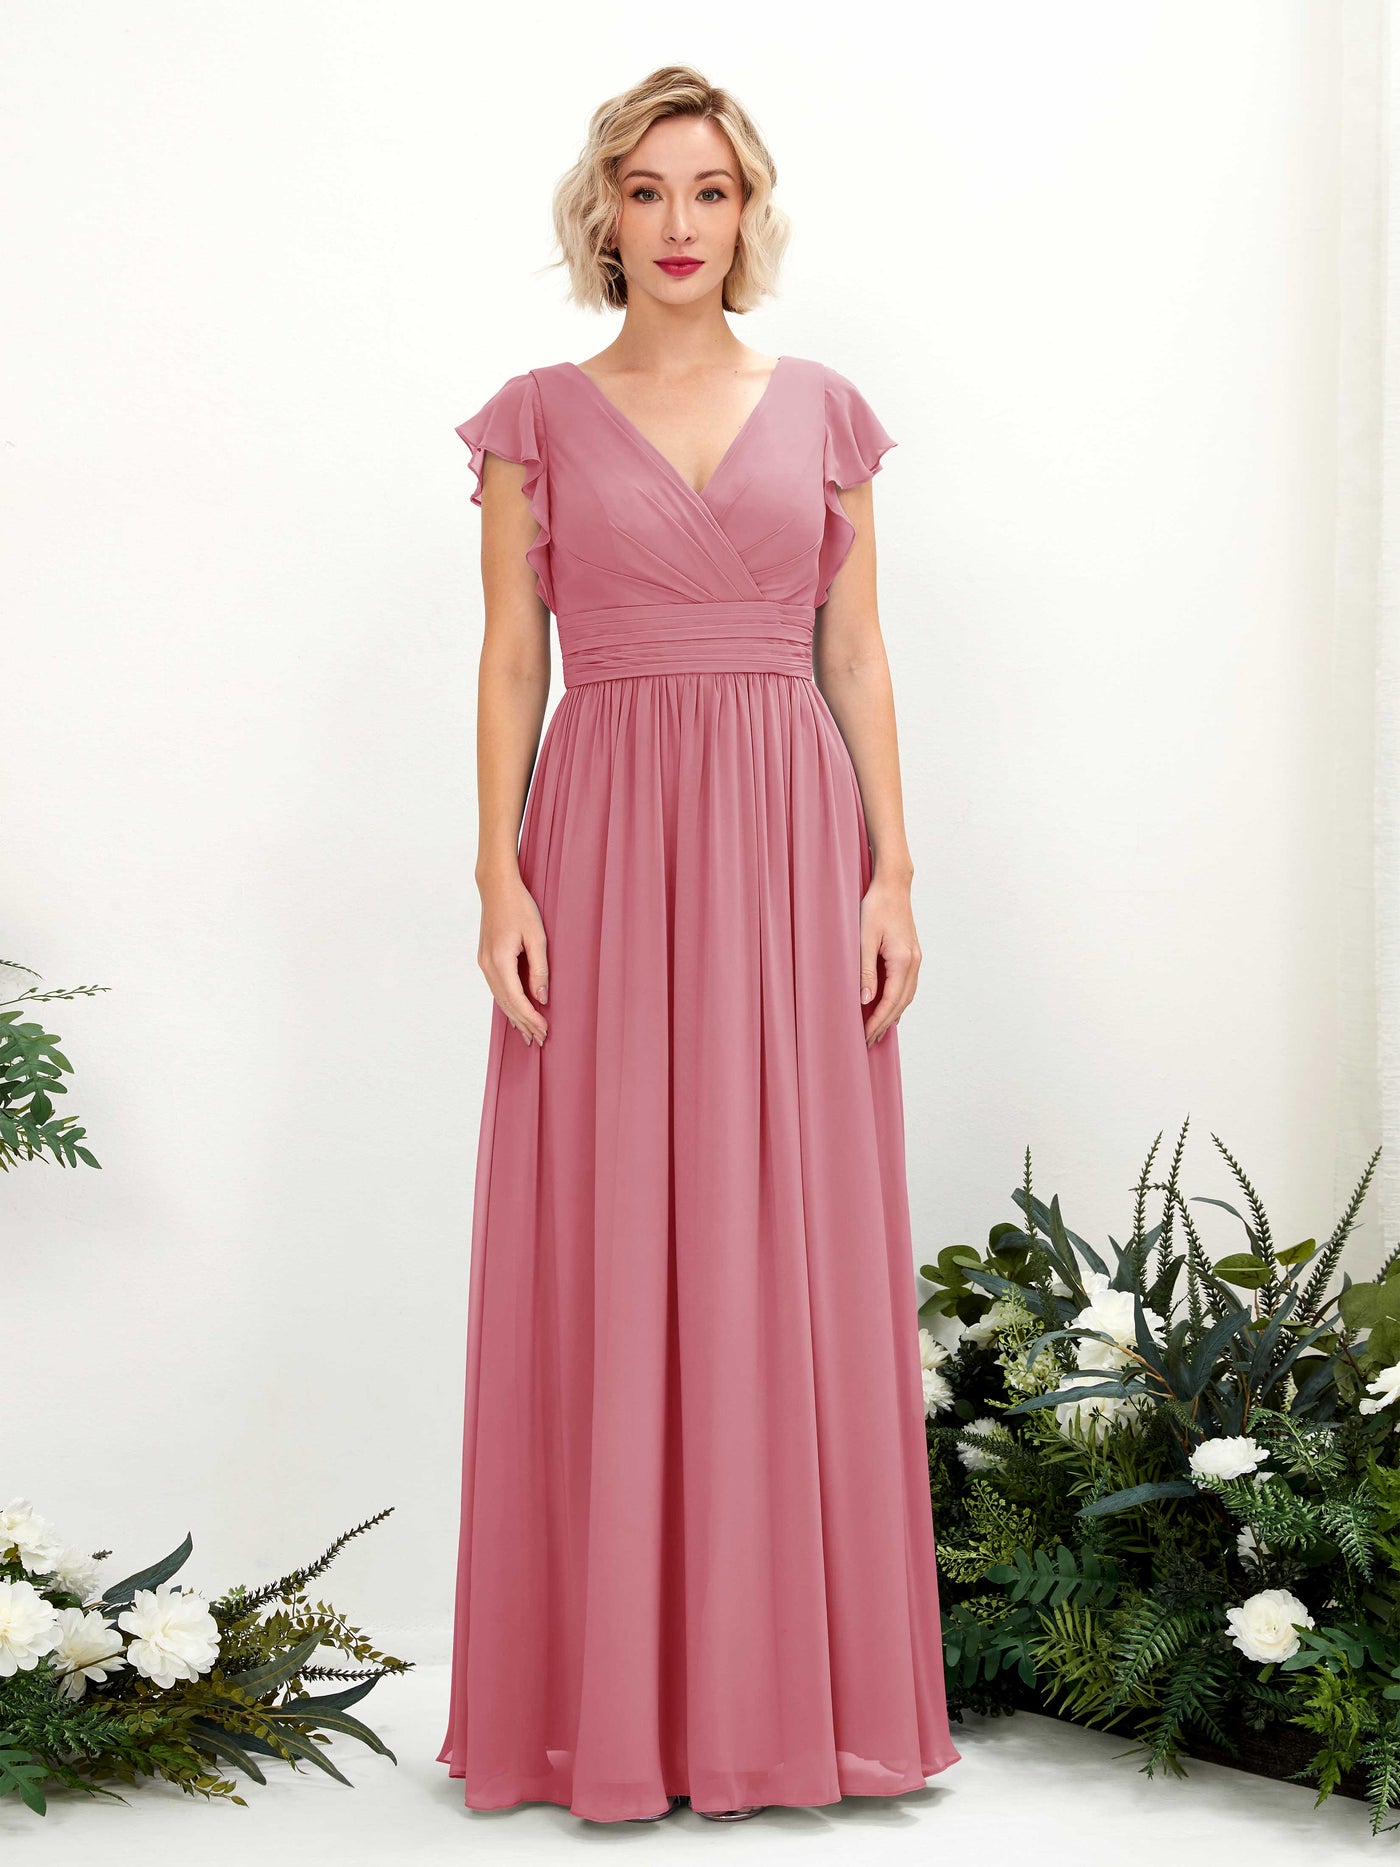 Desert Rose Bridesmaid Dresses Bridesmaid Dress A-line Chiffon V-neck Full Length Short Sleeves Wedding Party Dress (81222711)#color_desert-rose